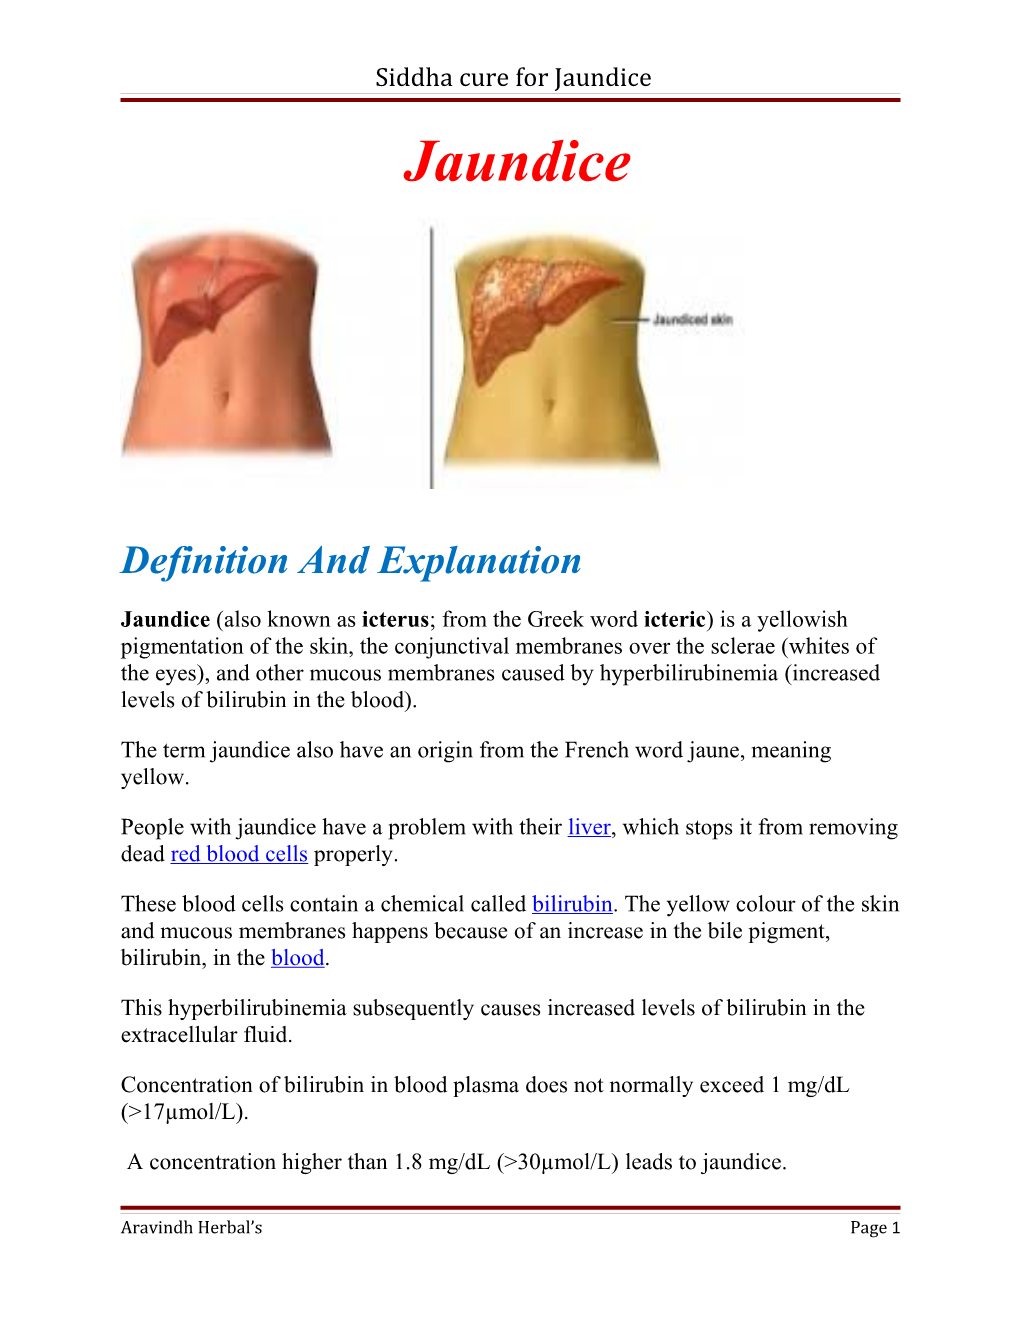 Siddha Cure for Jaundice